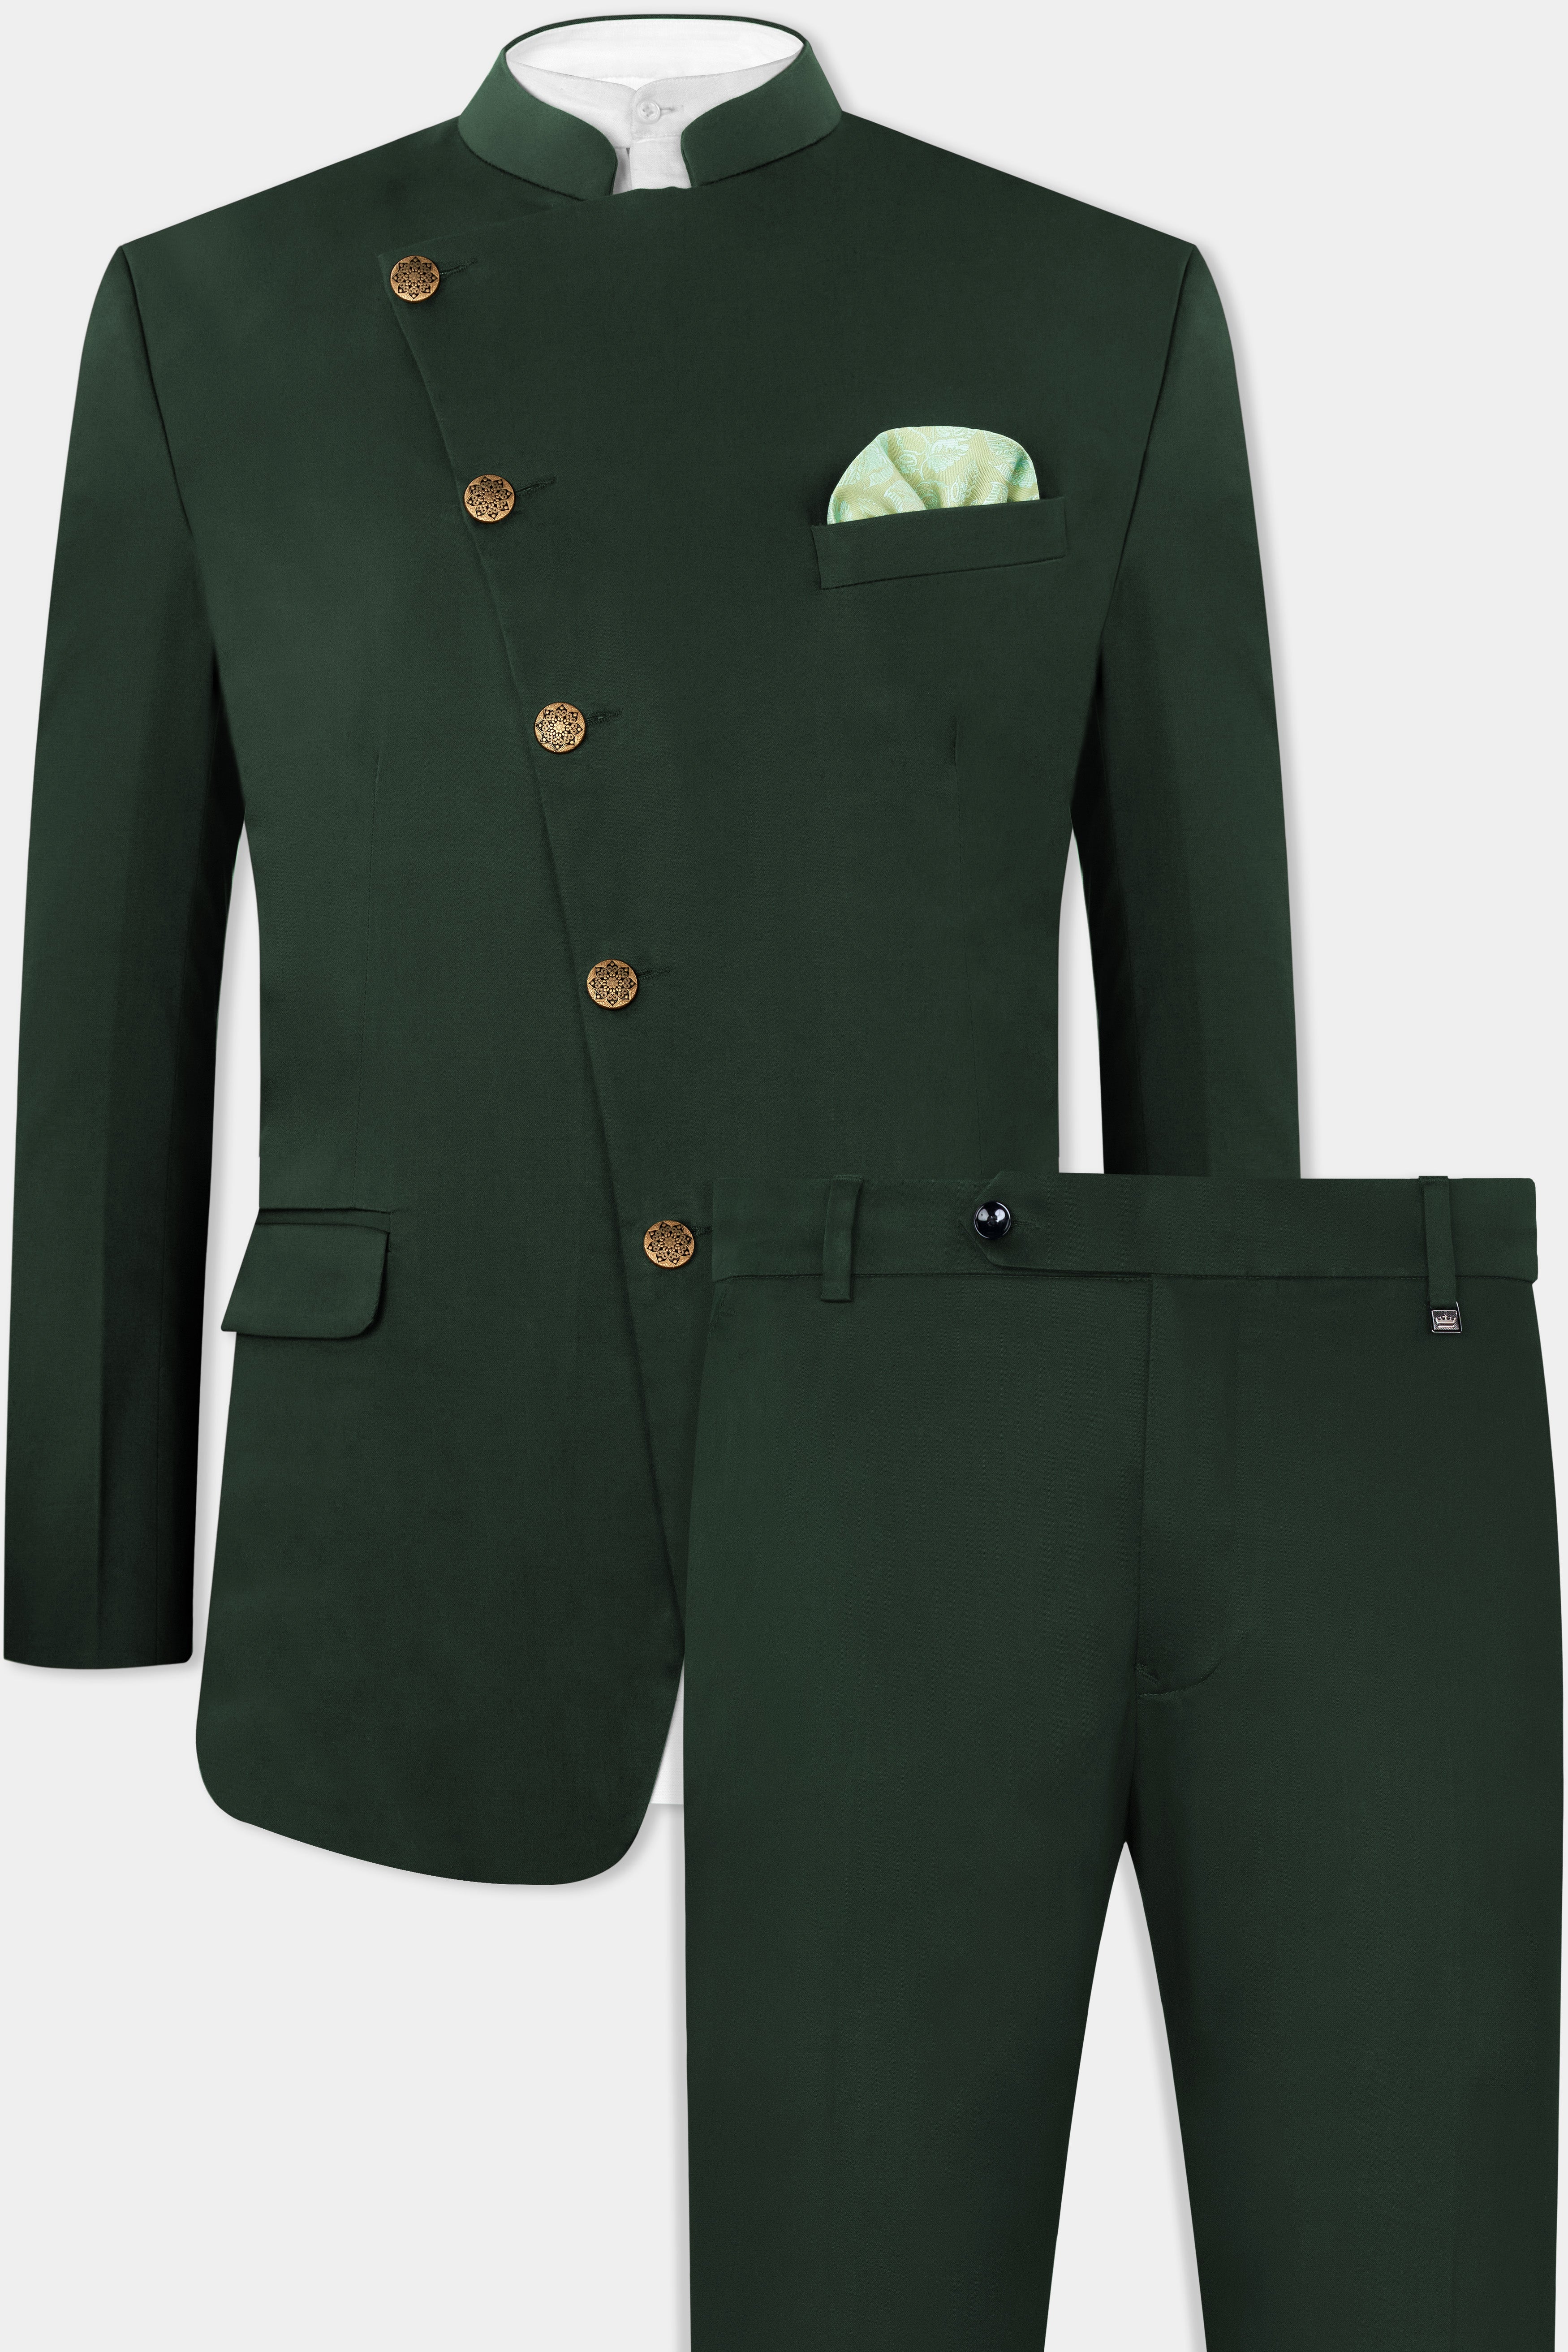 Heavy Metal Green Premium Cotton Cross Buttoned Bandhgala Stretchable Traveler Suit ST2777-CBG-36,ST2777-CBG-38,ST2777-CBG-40,ST2777-CBG-42,ST2777-CBG-44,ST2777-CBG-46,ST2777-CBG-48,ST2777-CBG-50,ST2777-CBG-52,ST2777-CBG-54,ST2777-CBG-56,ST2777-CBG-58,ST2777-CBG-60